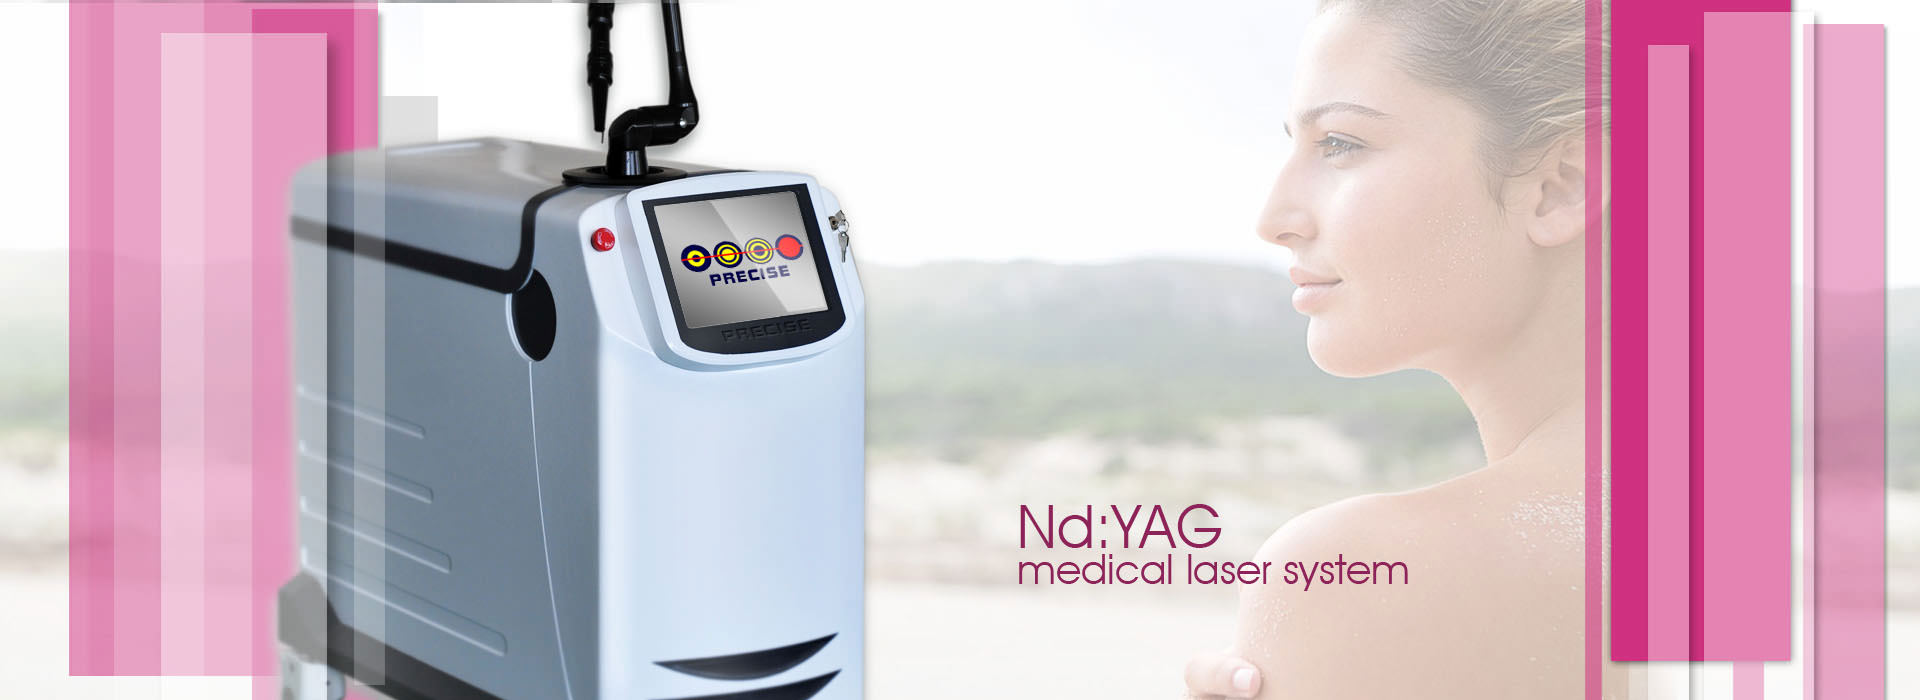 Nd:YAG Laser System